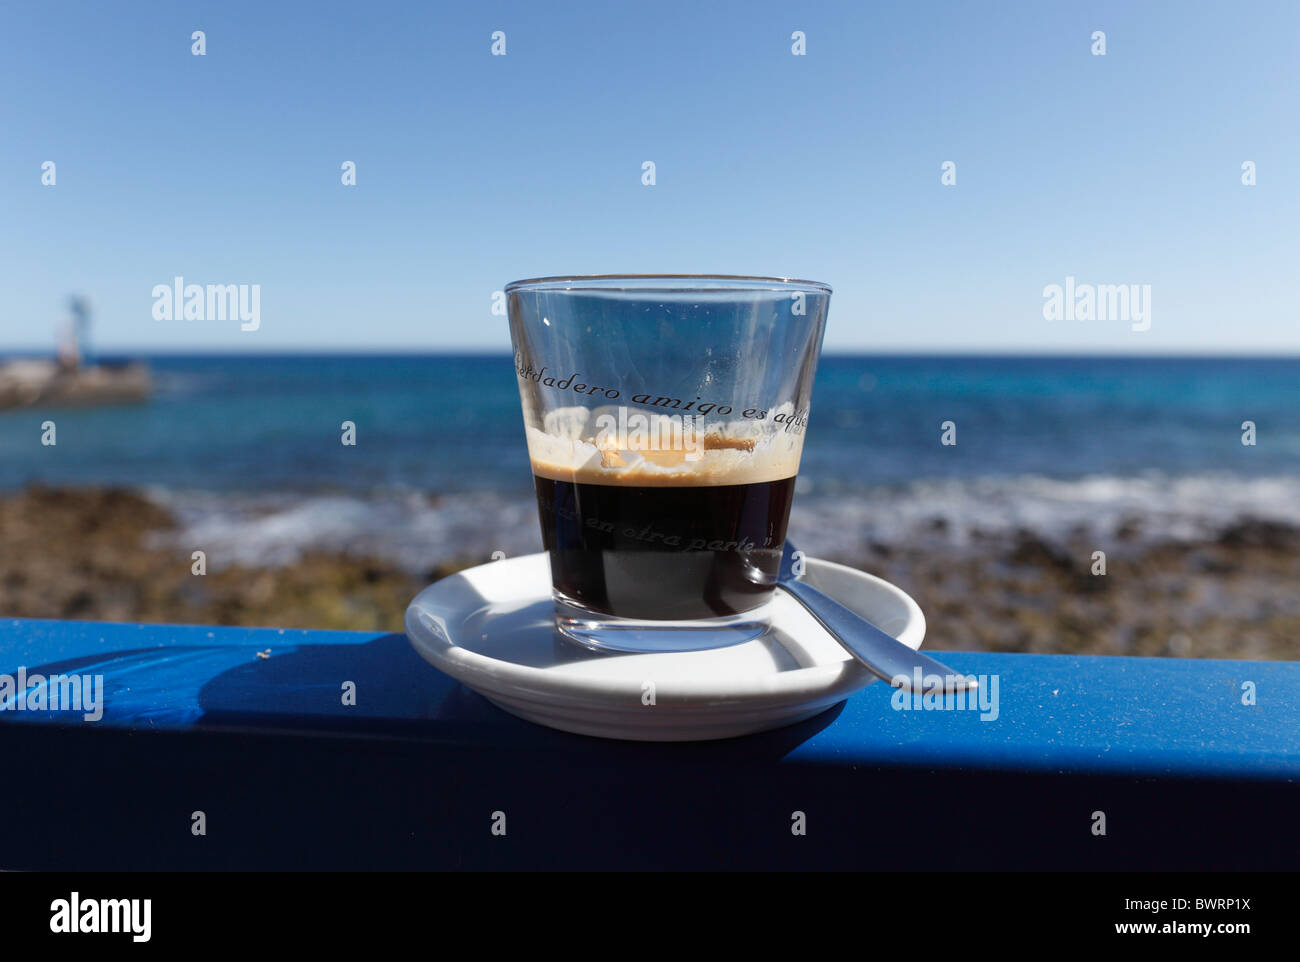 Vaso de café negro, café solo, expresso, Arrieta, Lanzarote, Islas Canarias, España, Europa Foto de stock